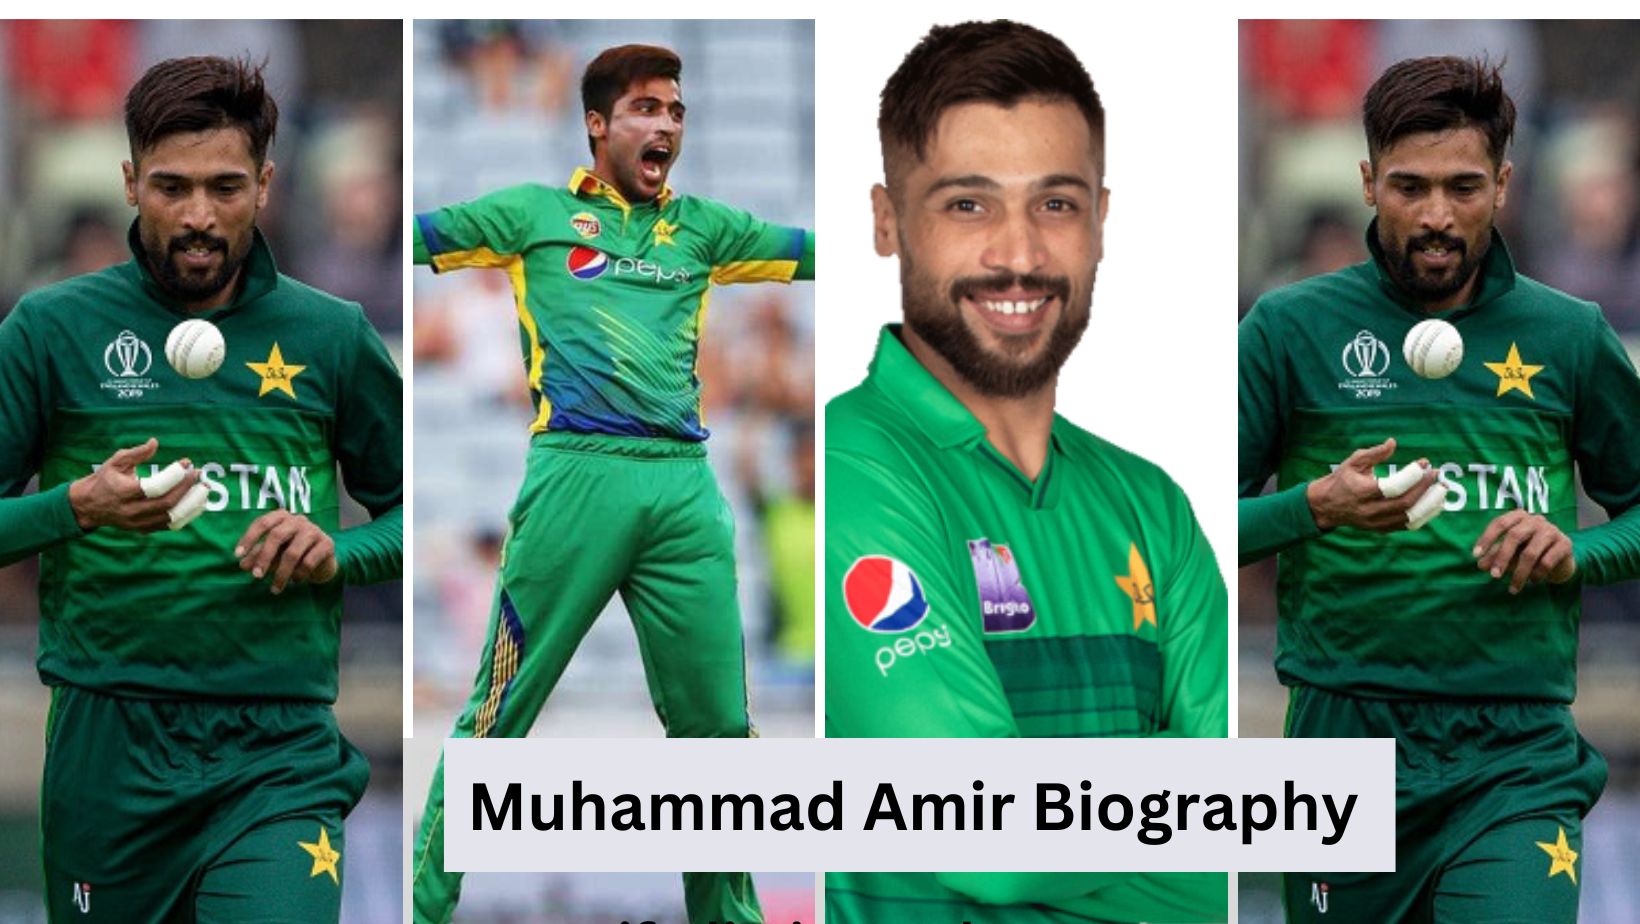 Muhammad Amir Biography